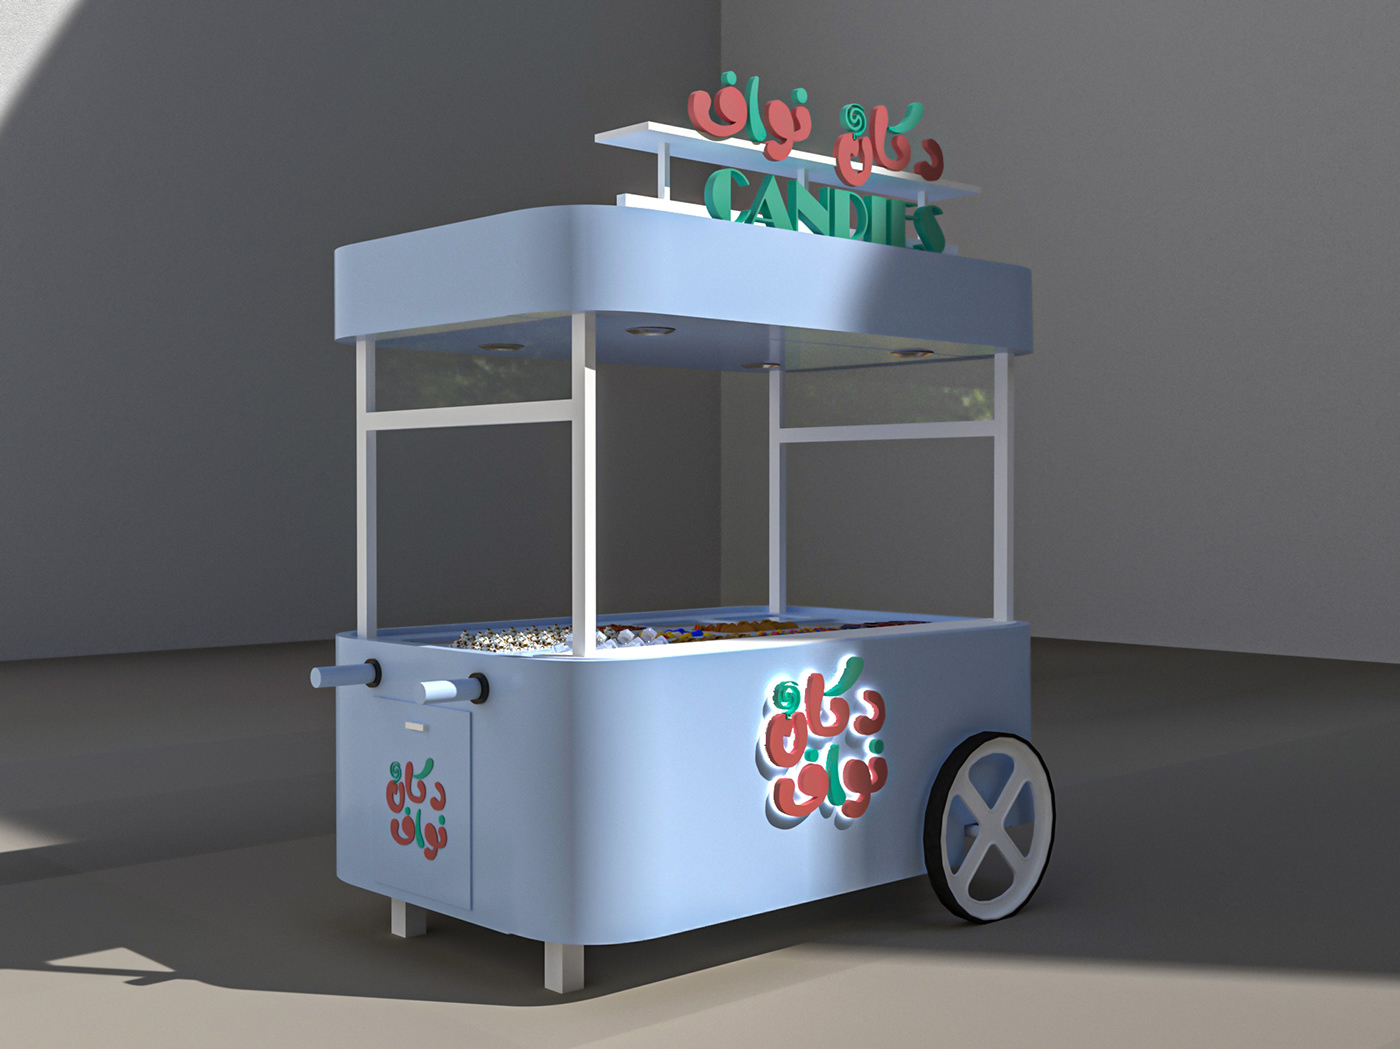 3D 3ds max Candies candies cart Candy car cart corona Render sweet